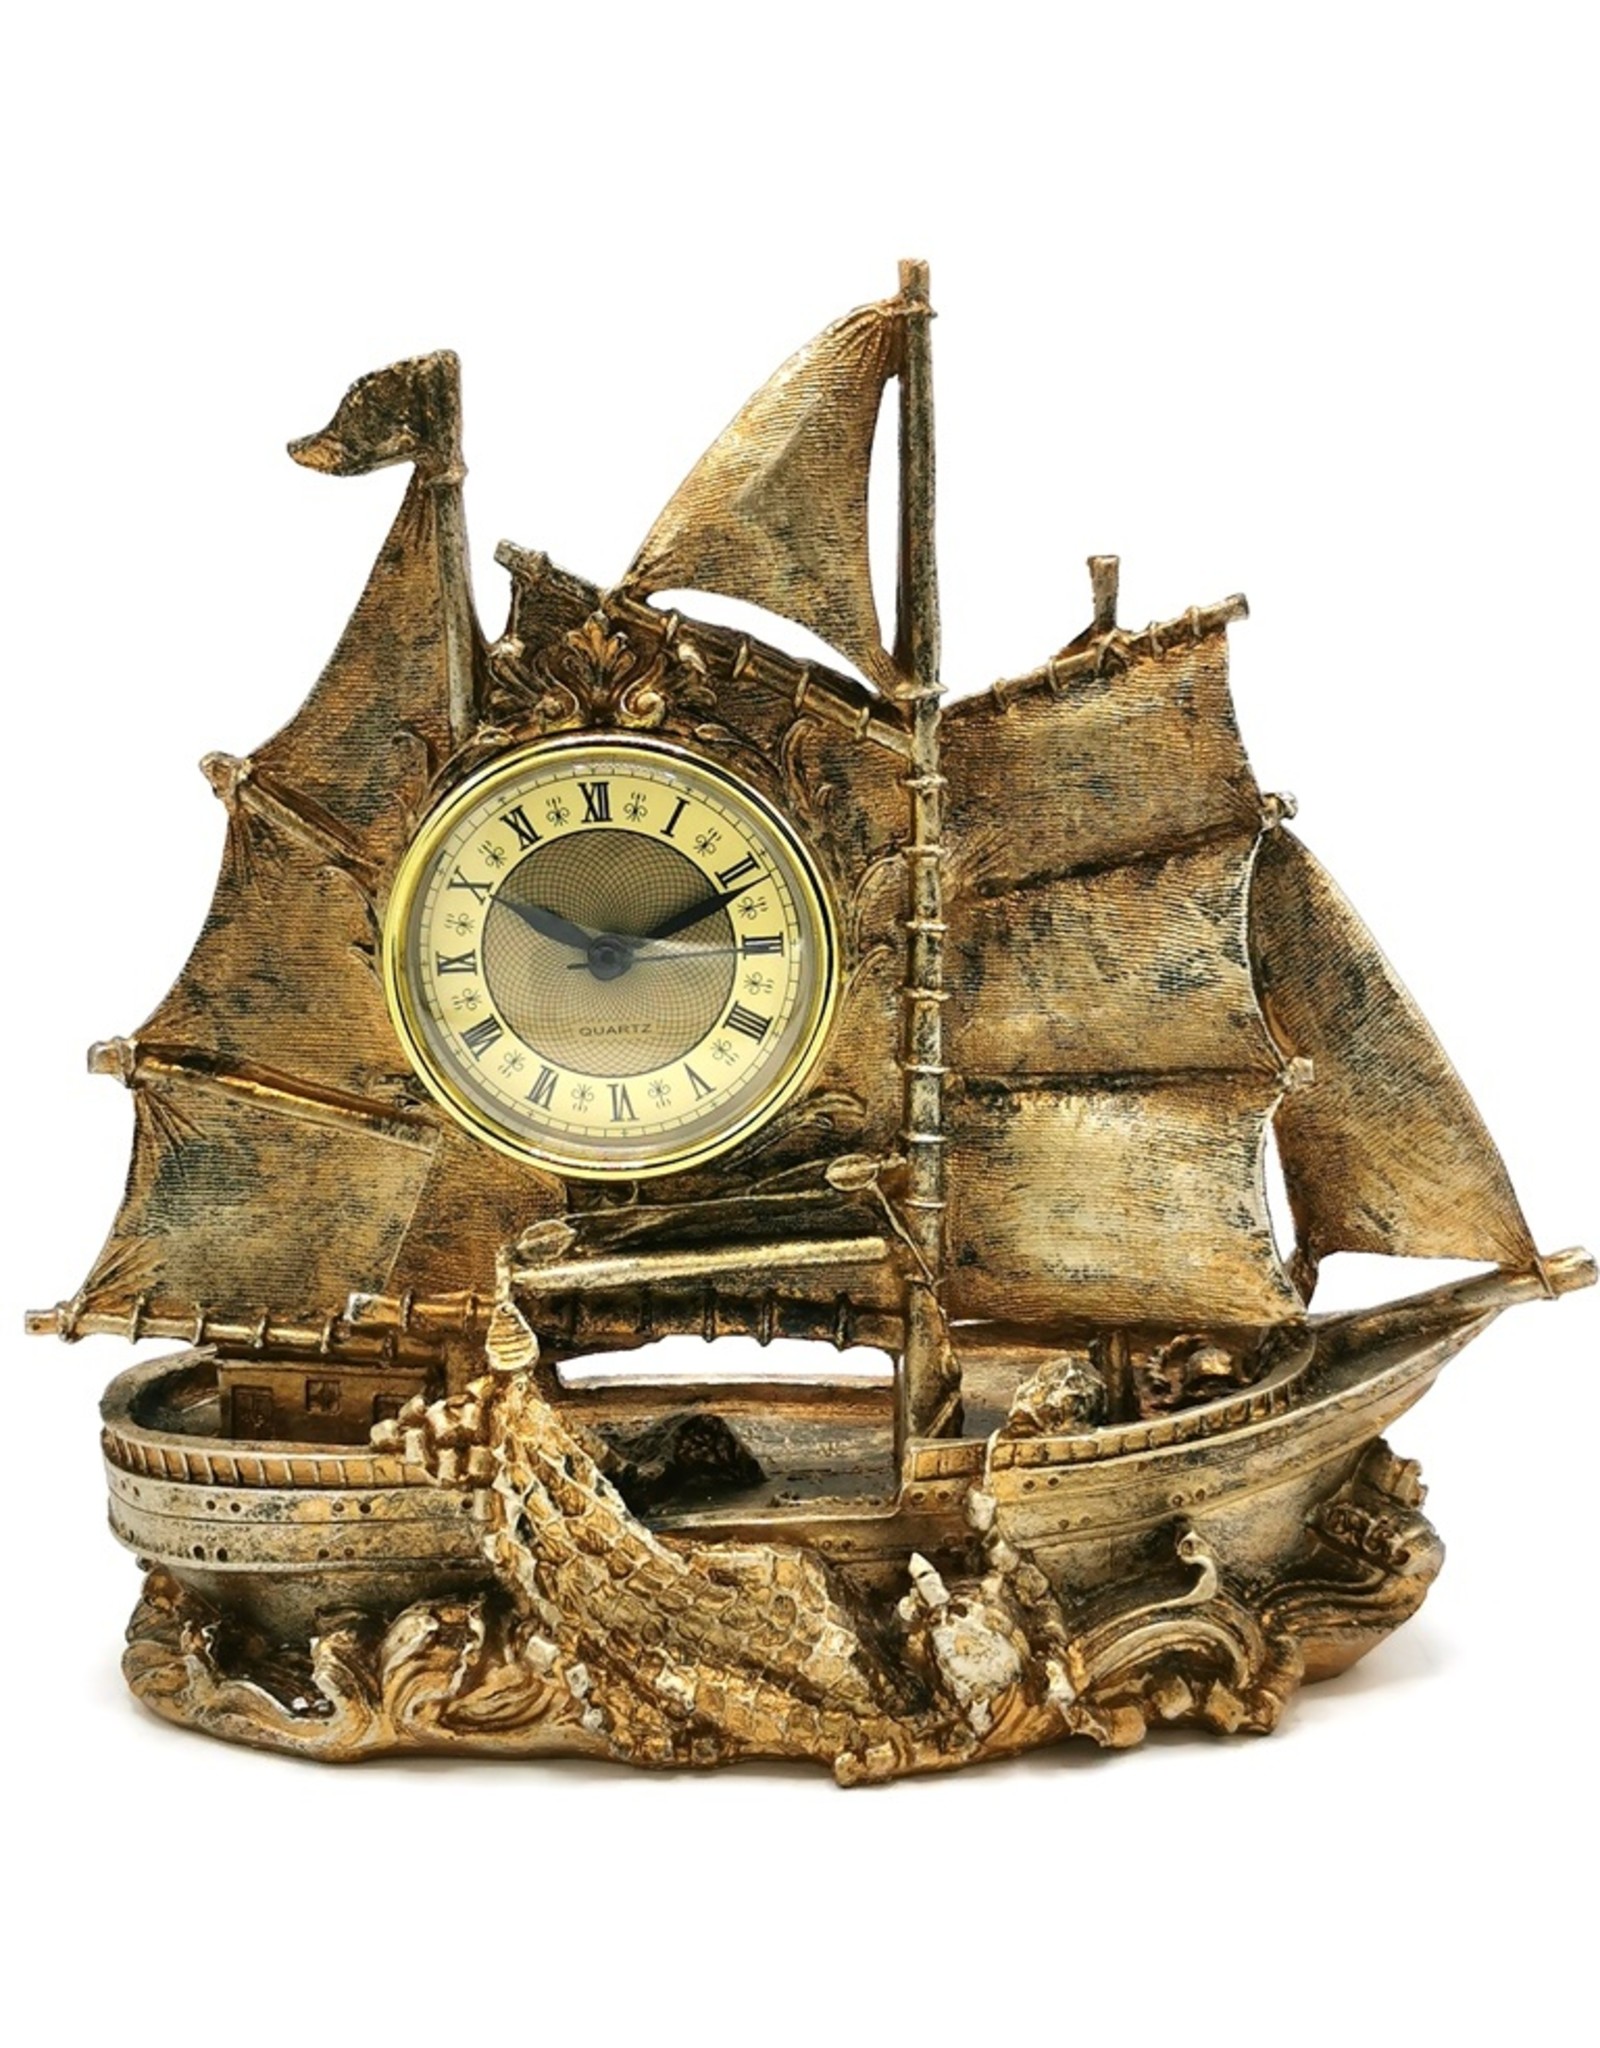 Trukado Miscellaneous -  Sailboat Table Clock bronze-coloured